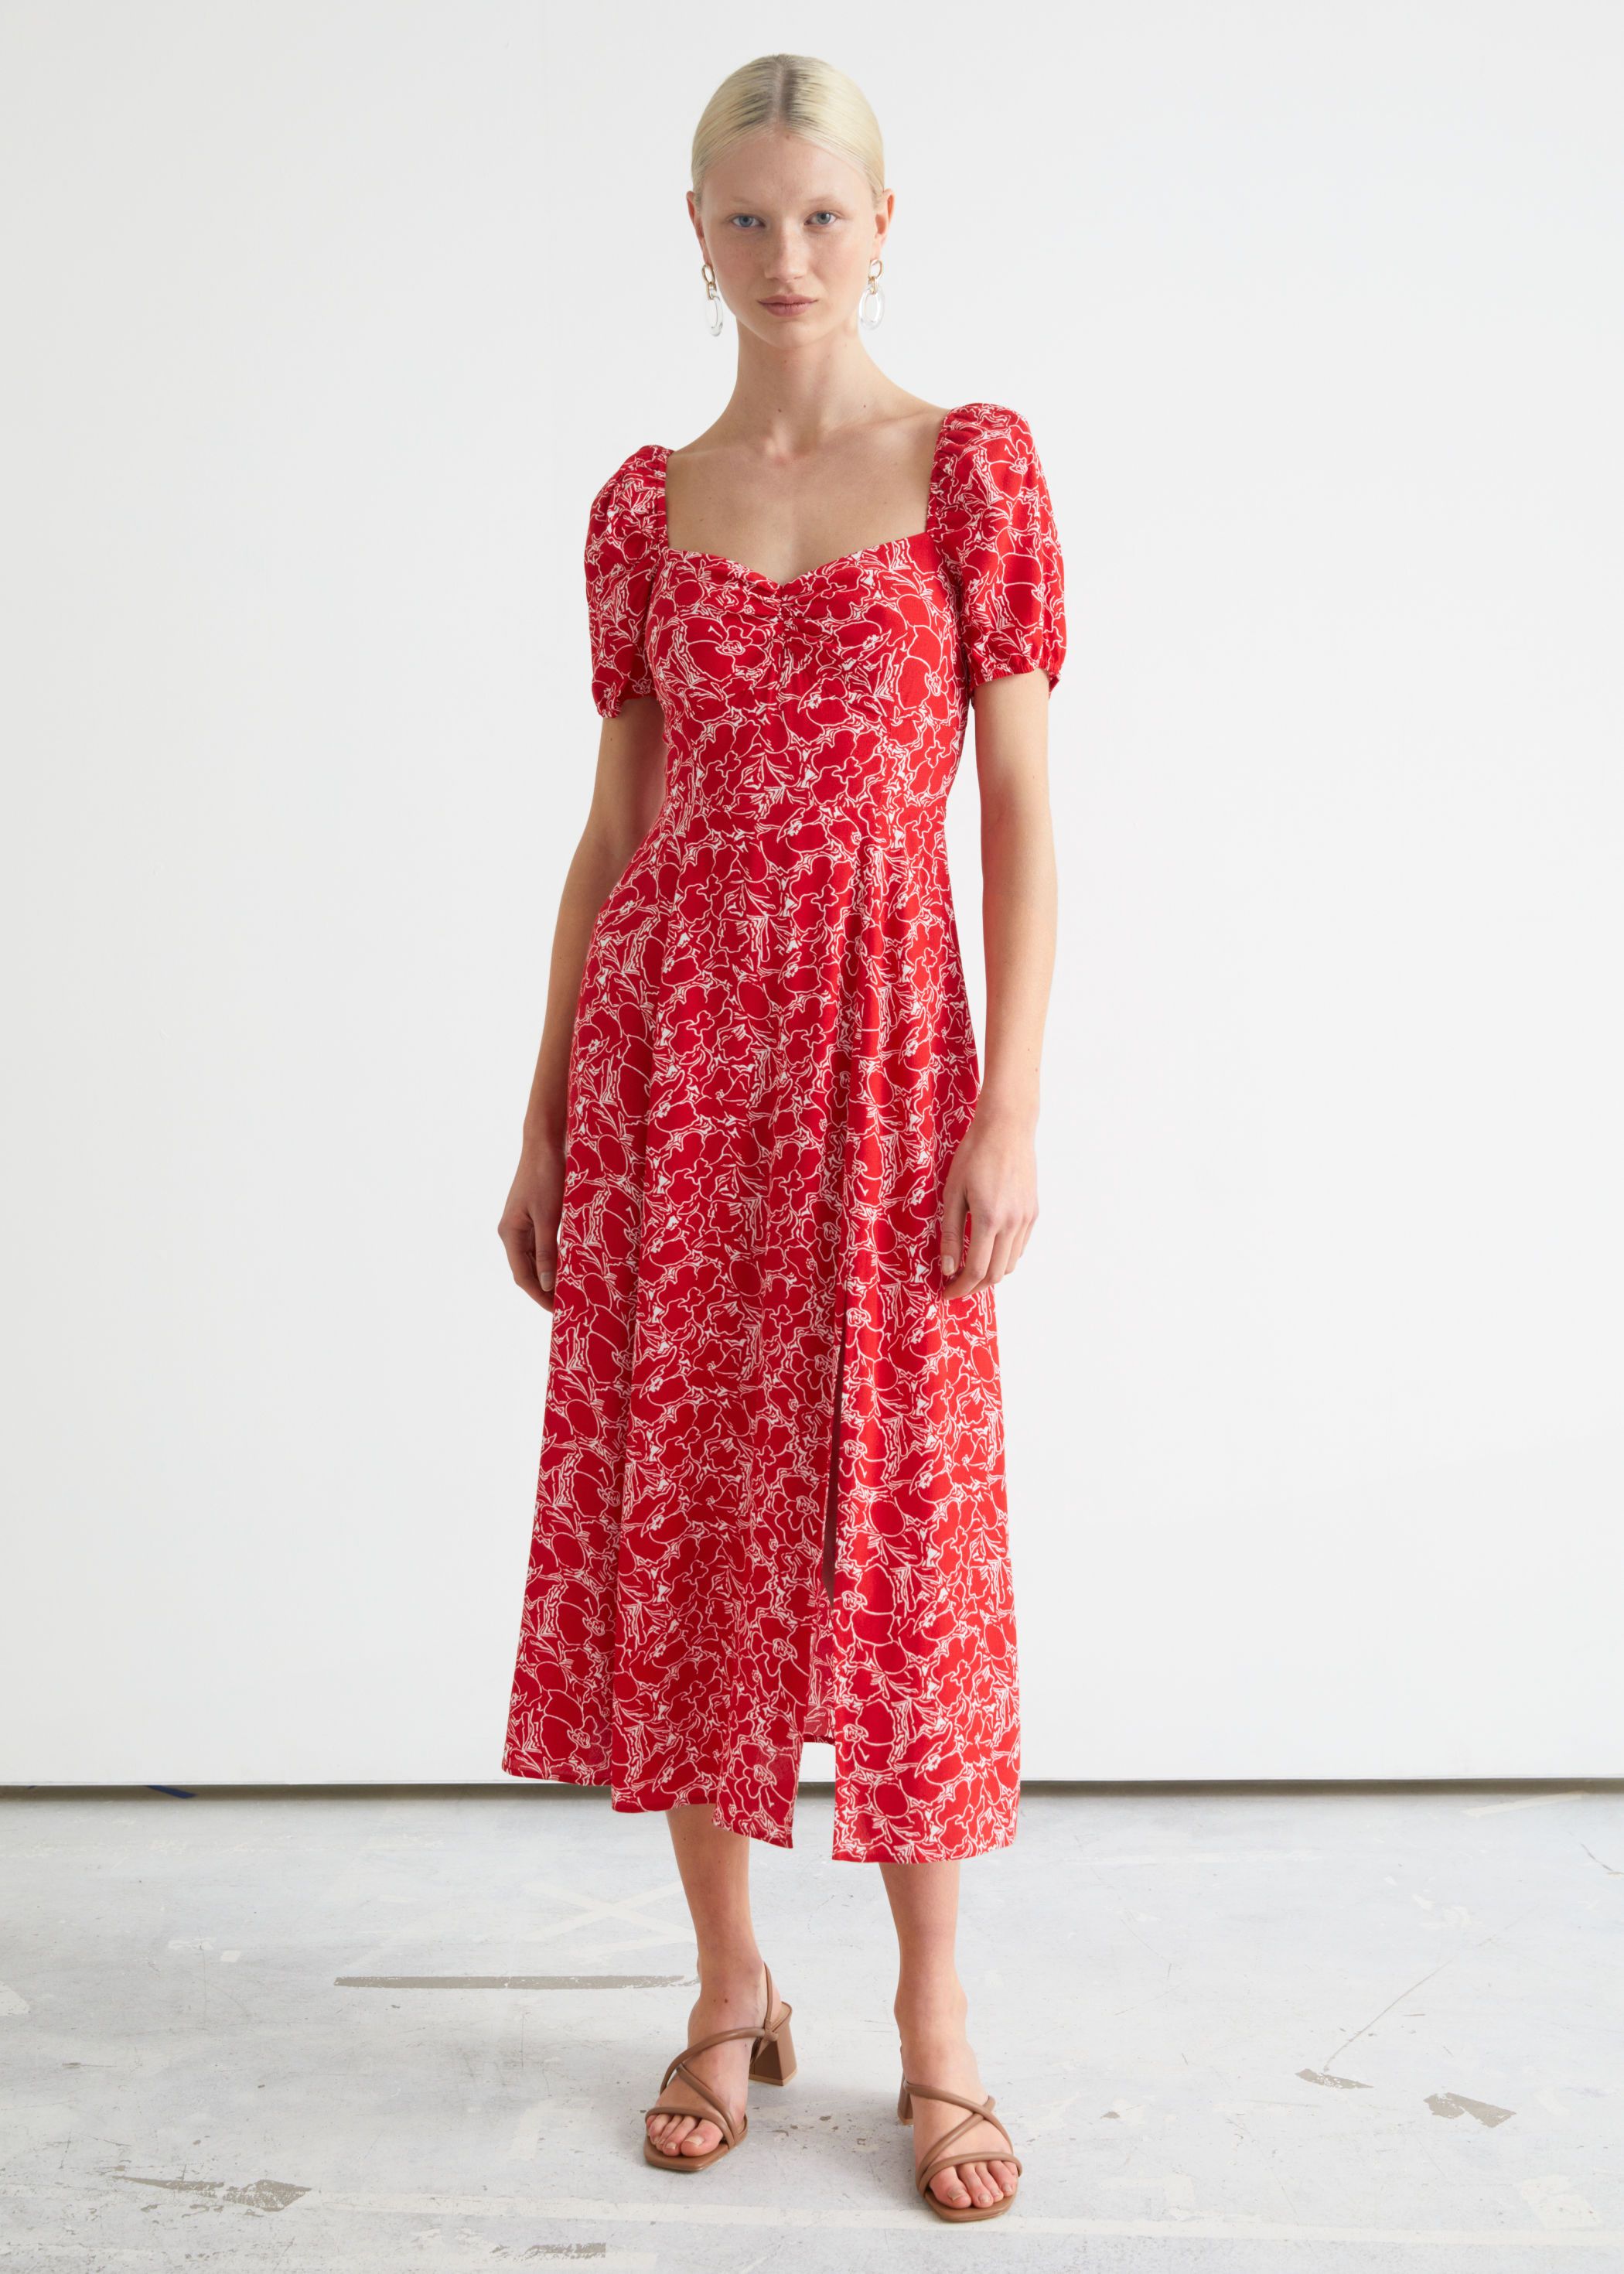 Buy > comfortable summer dresses 2021 > in stock